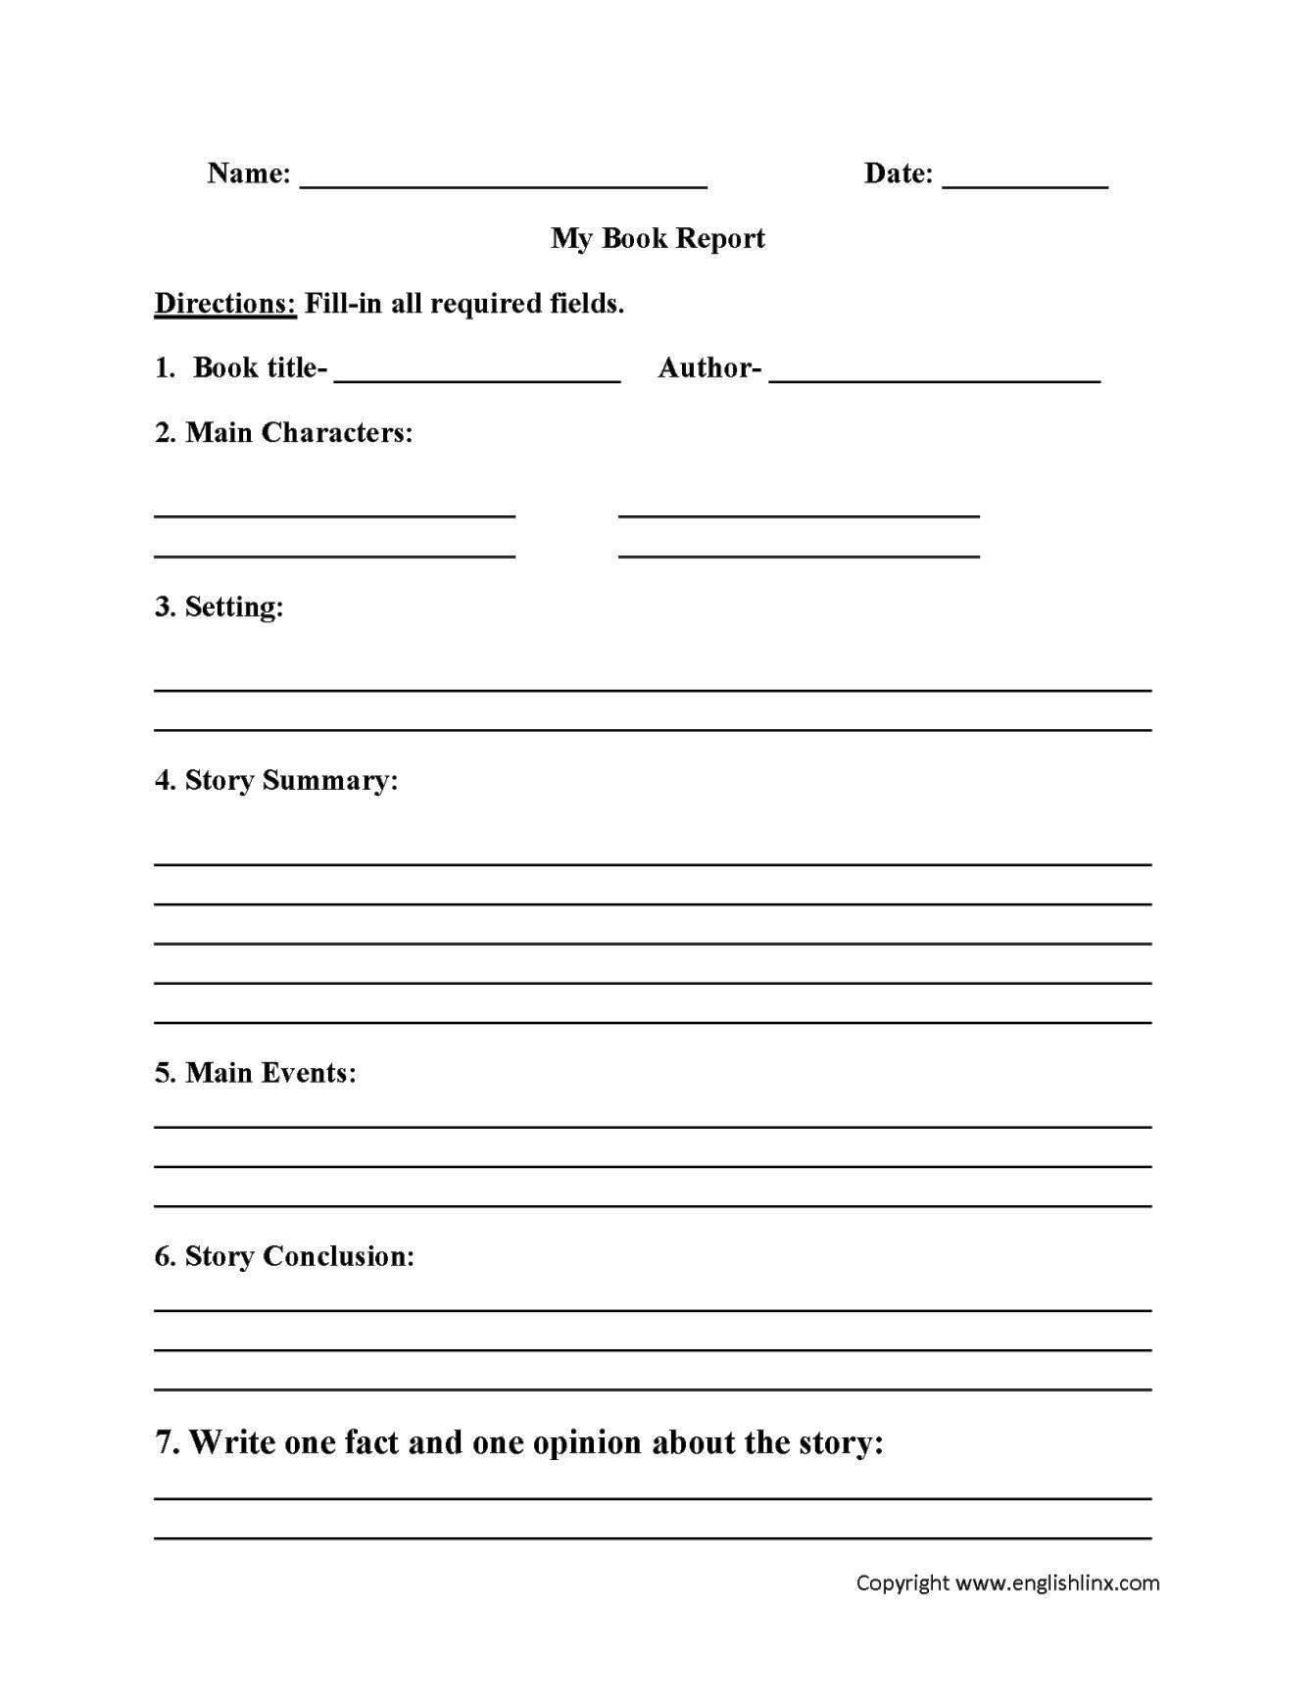 grade-5-book-report-template-sampletemplatess-sampletemplatess